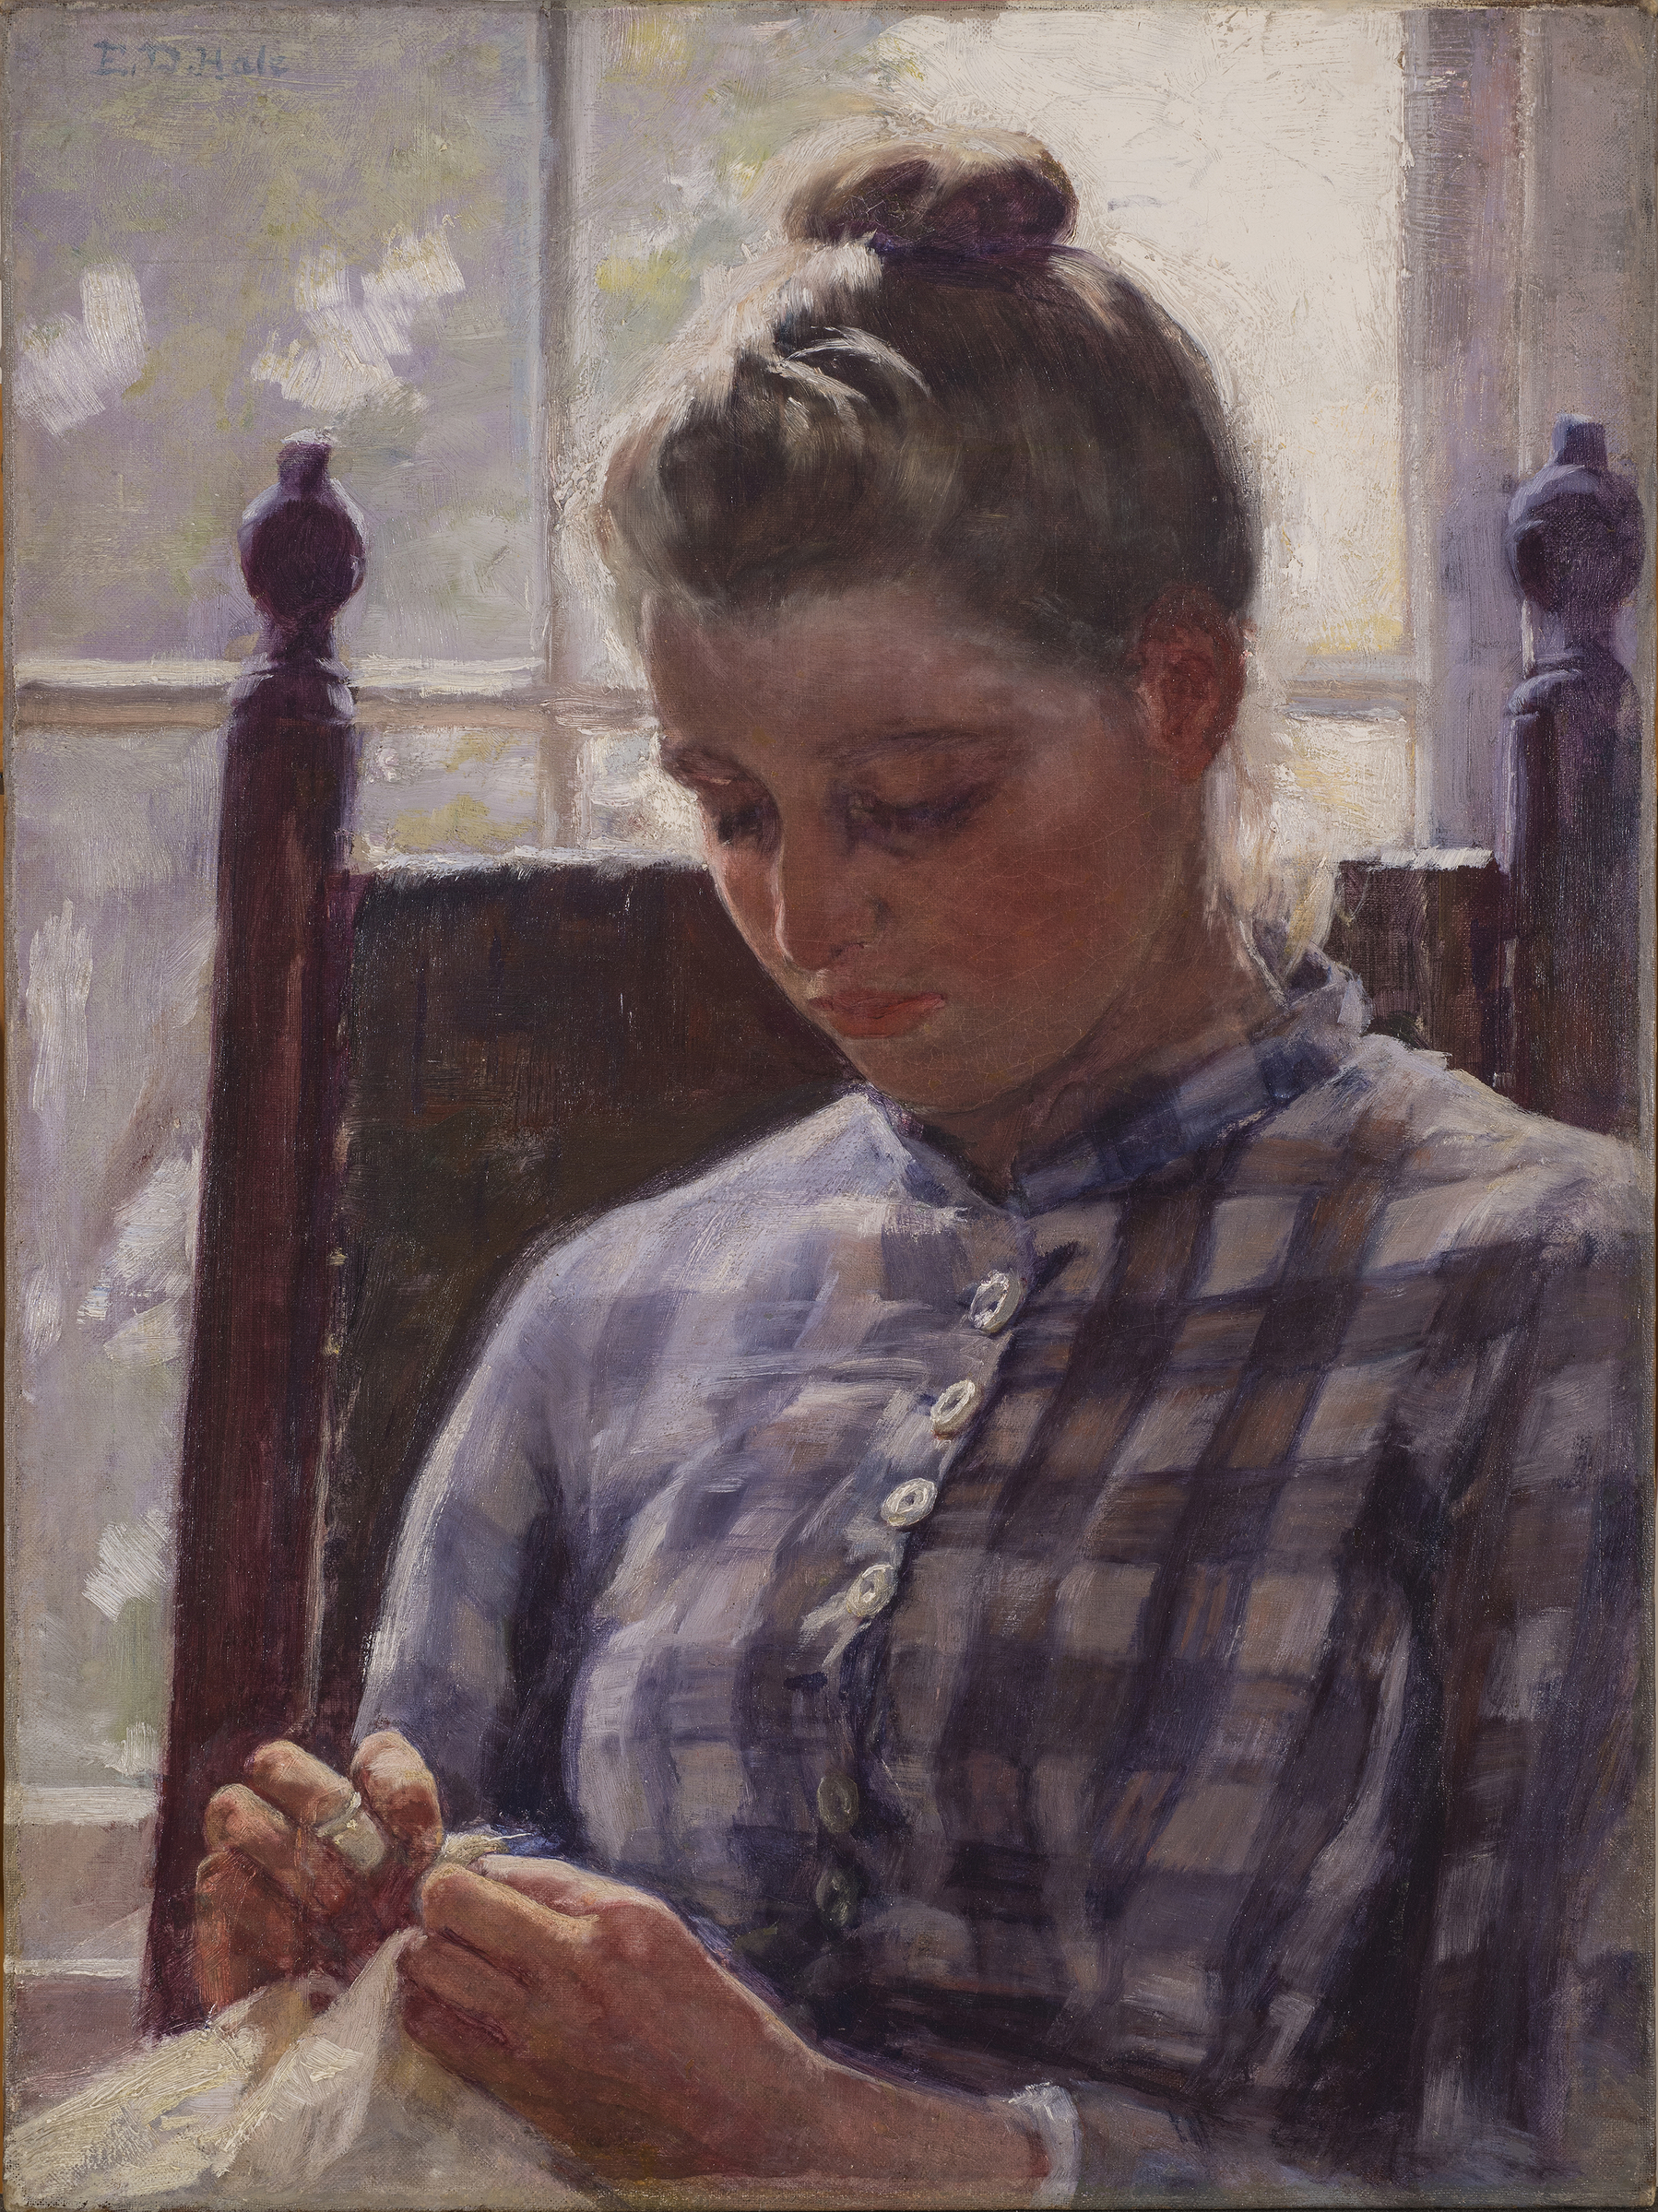 June by Ellen Day Hale - ca. 1893 - 61x46 cm National Museum of Women in the Arts